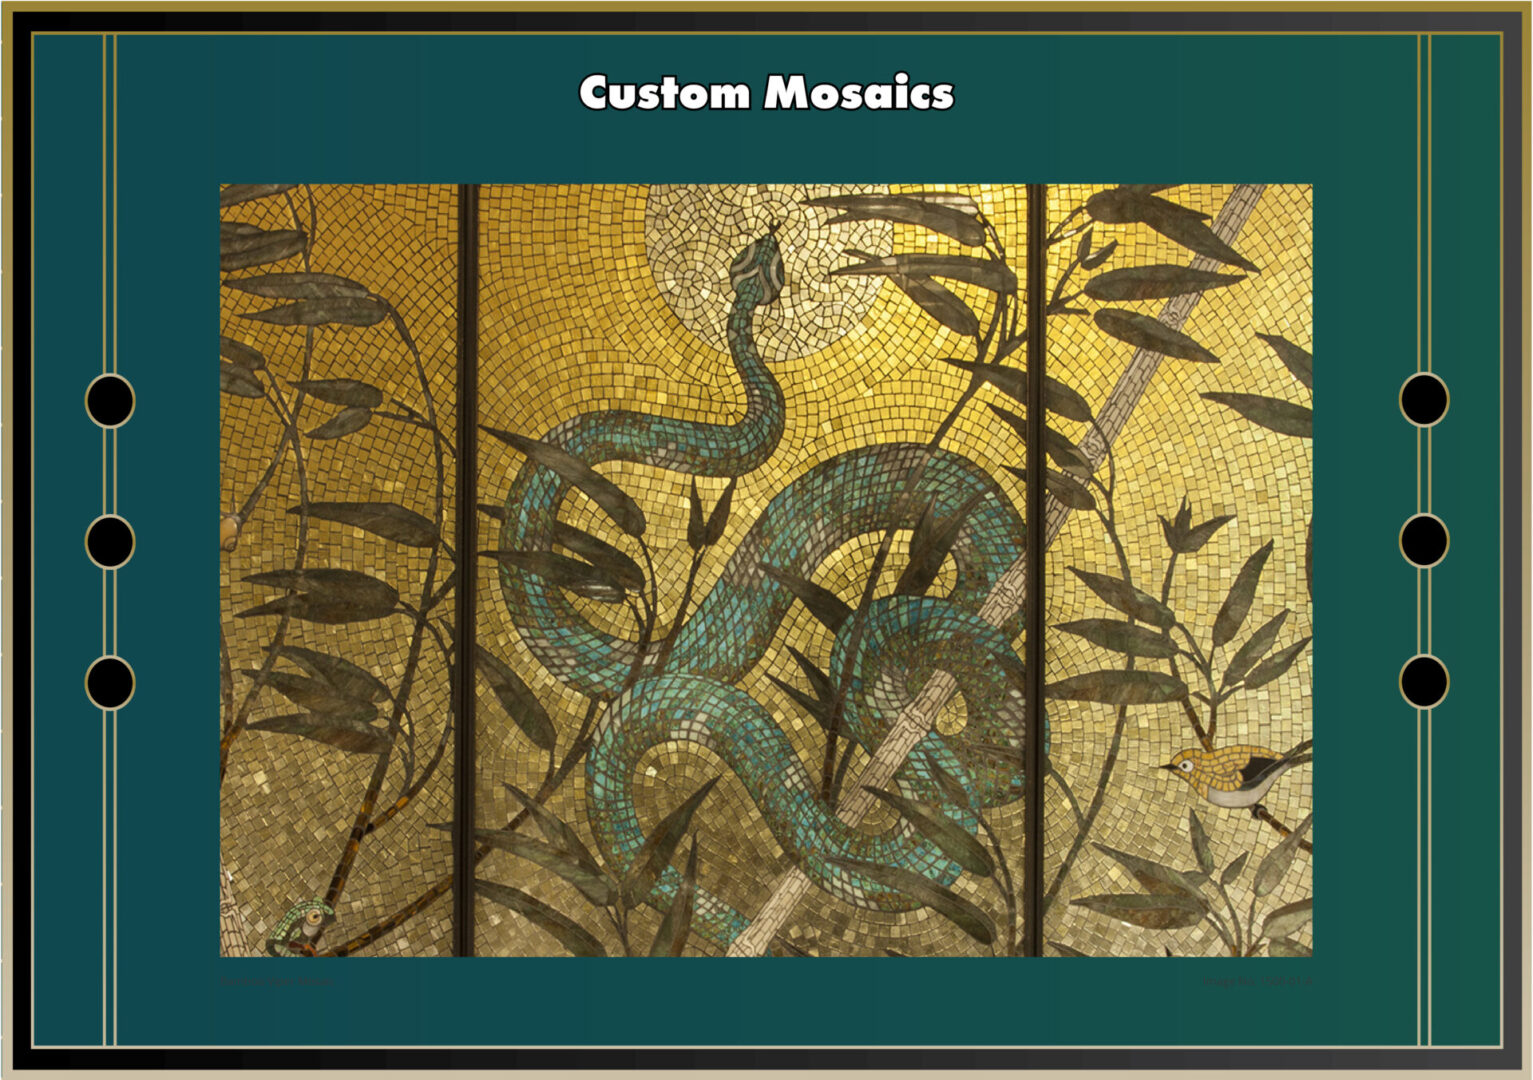 Custom Mosaics are available at Streamline Modern